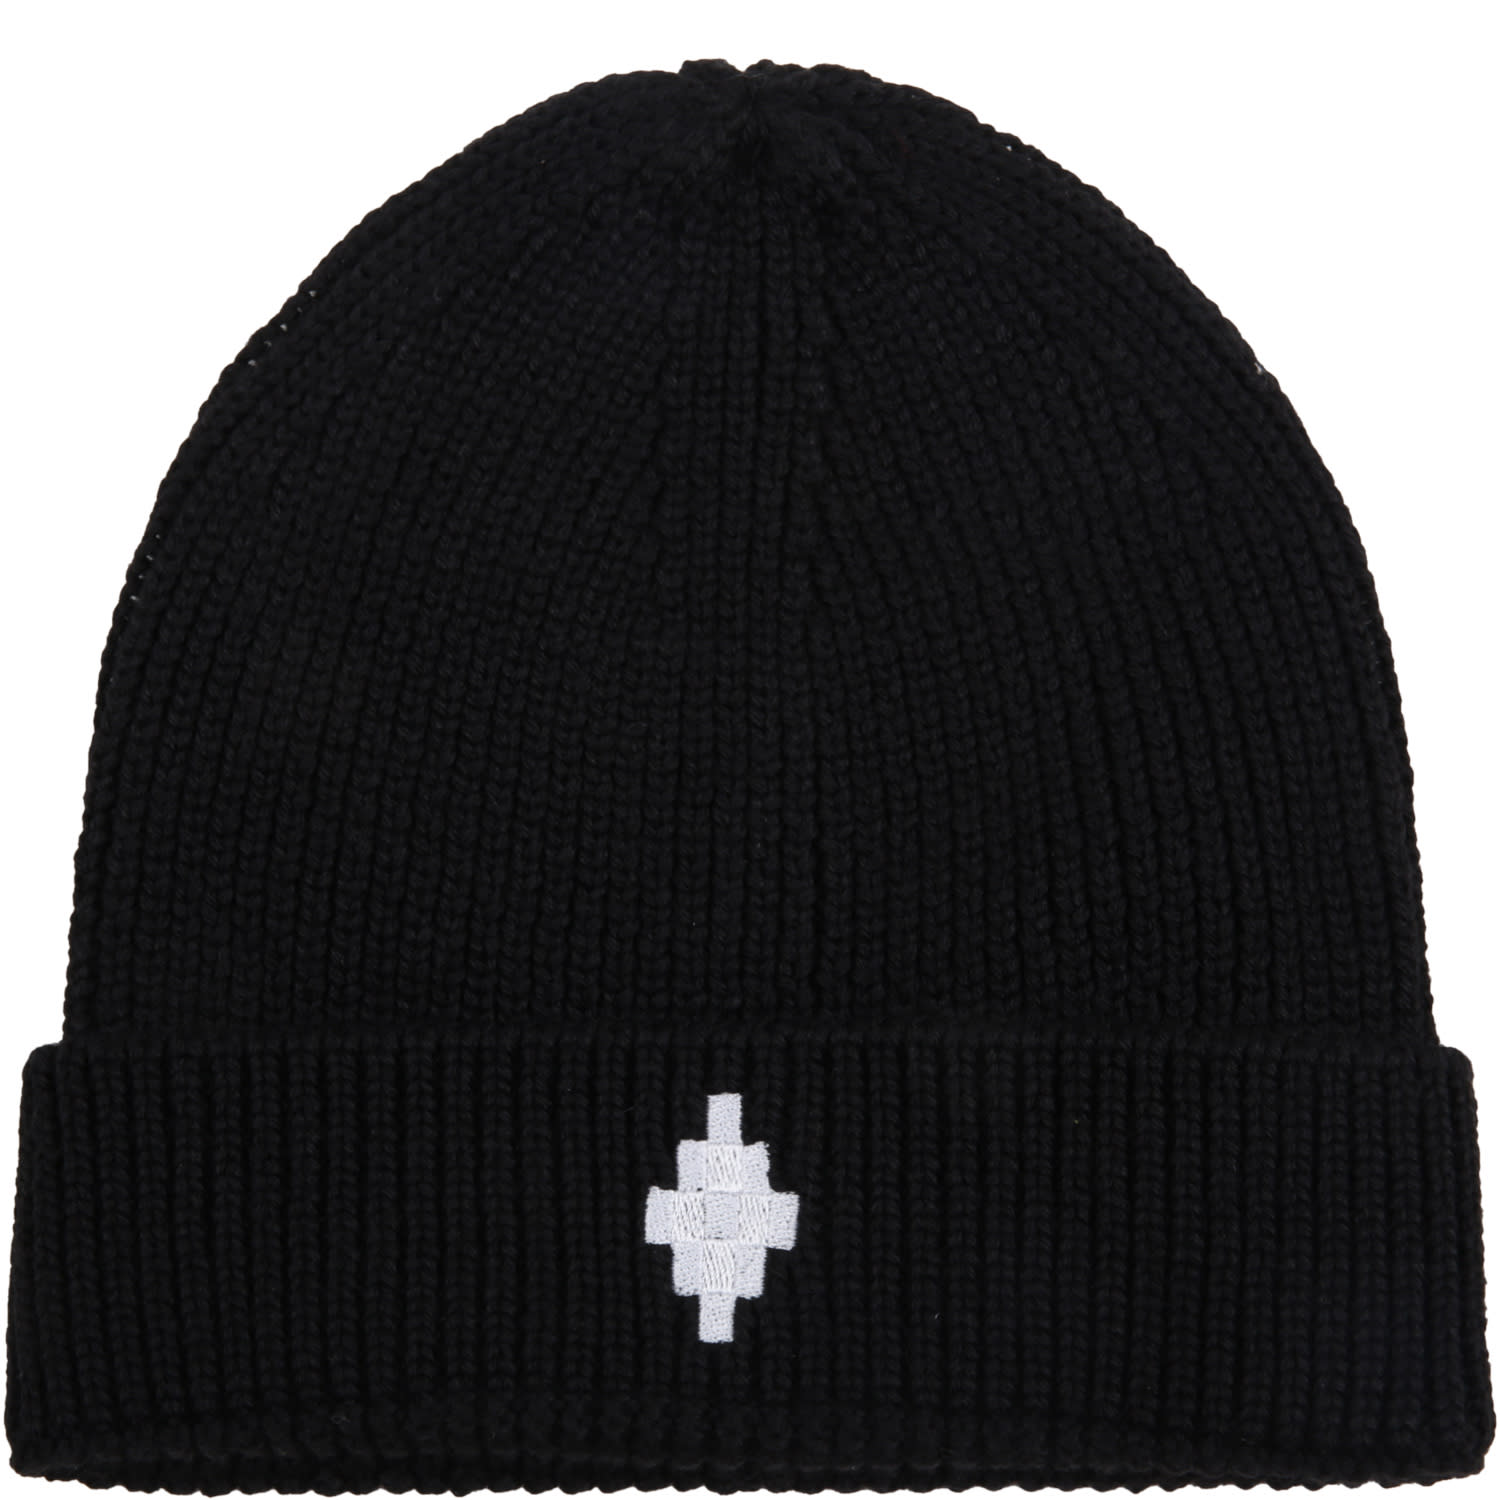 Marcelo Burlon Black Hat For Kids With Cross